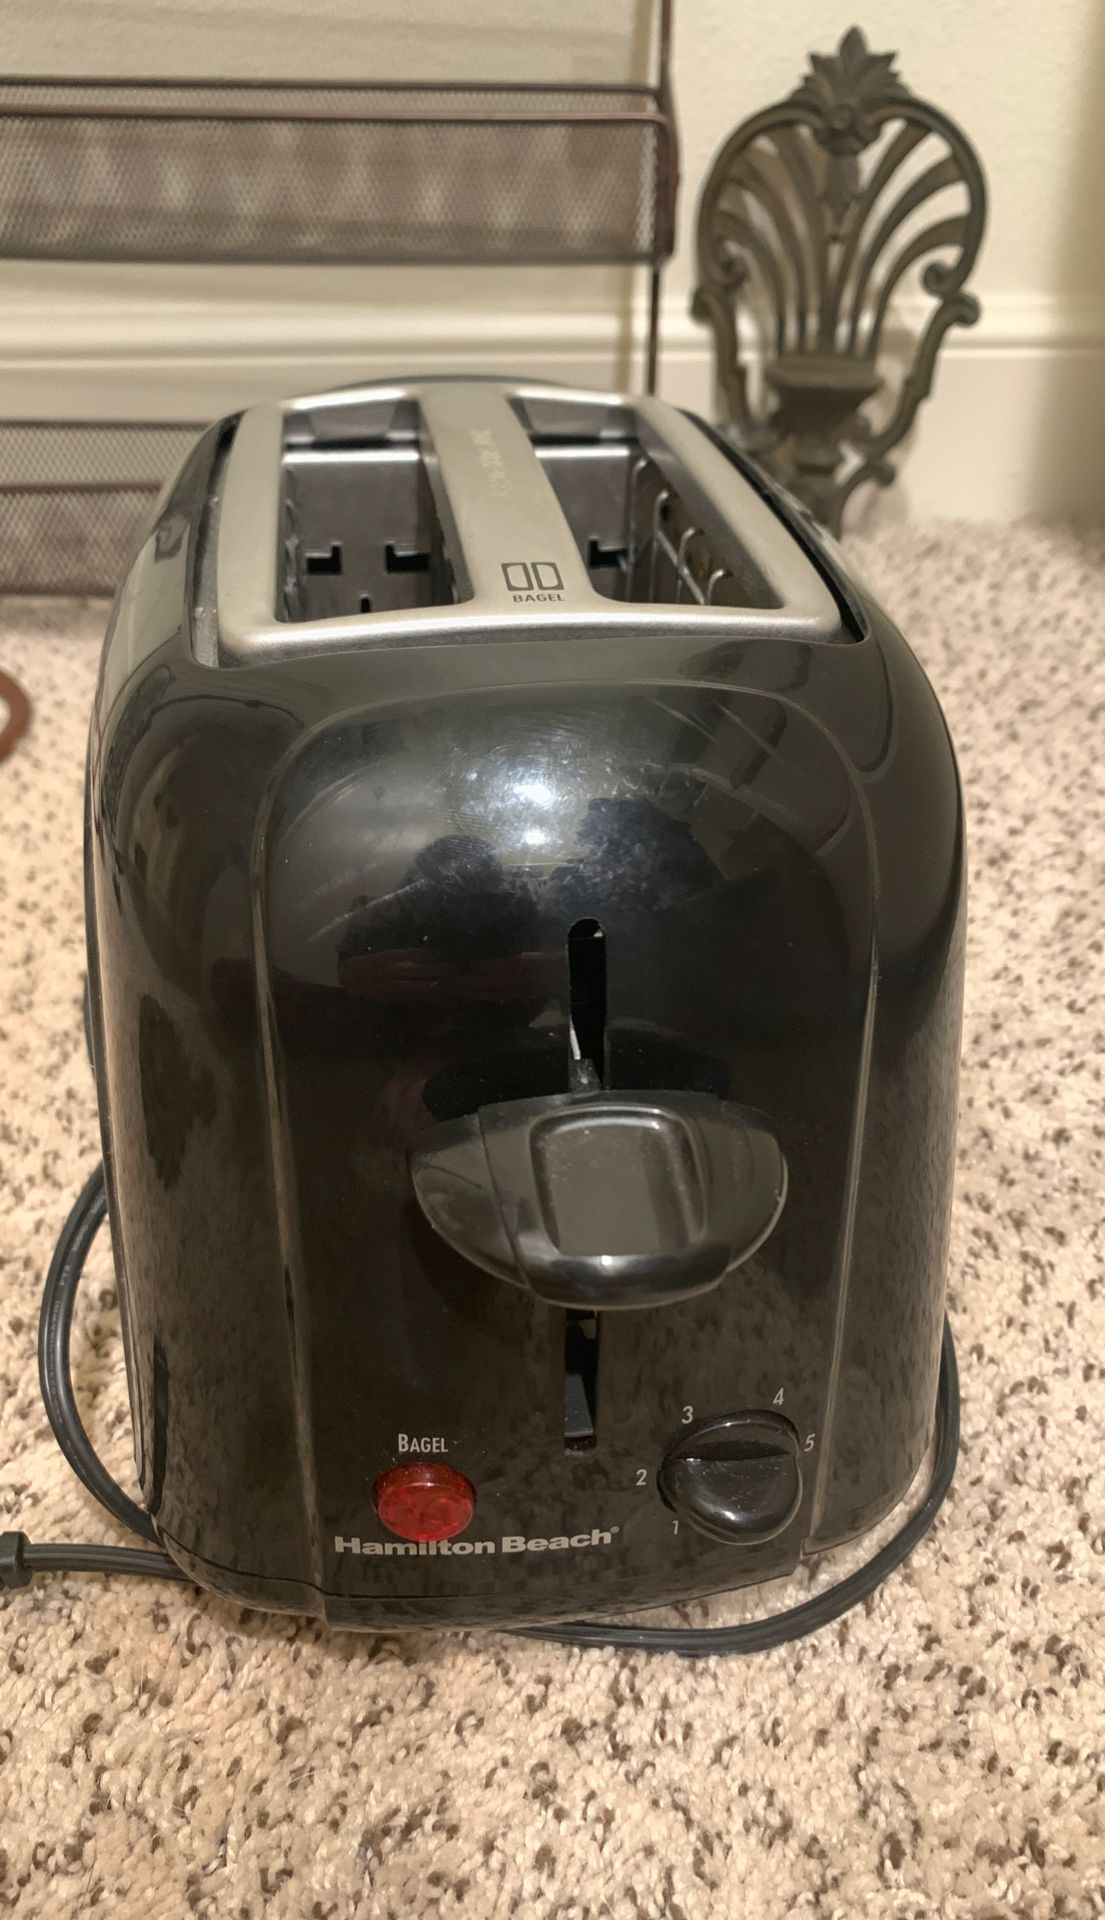 Hamilton beach toaster